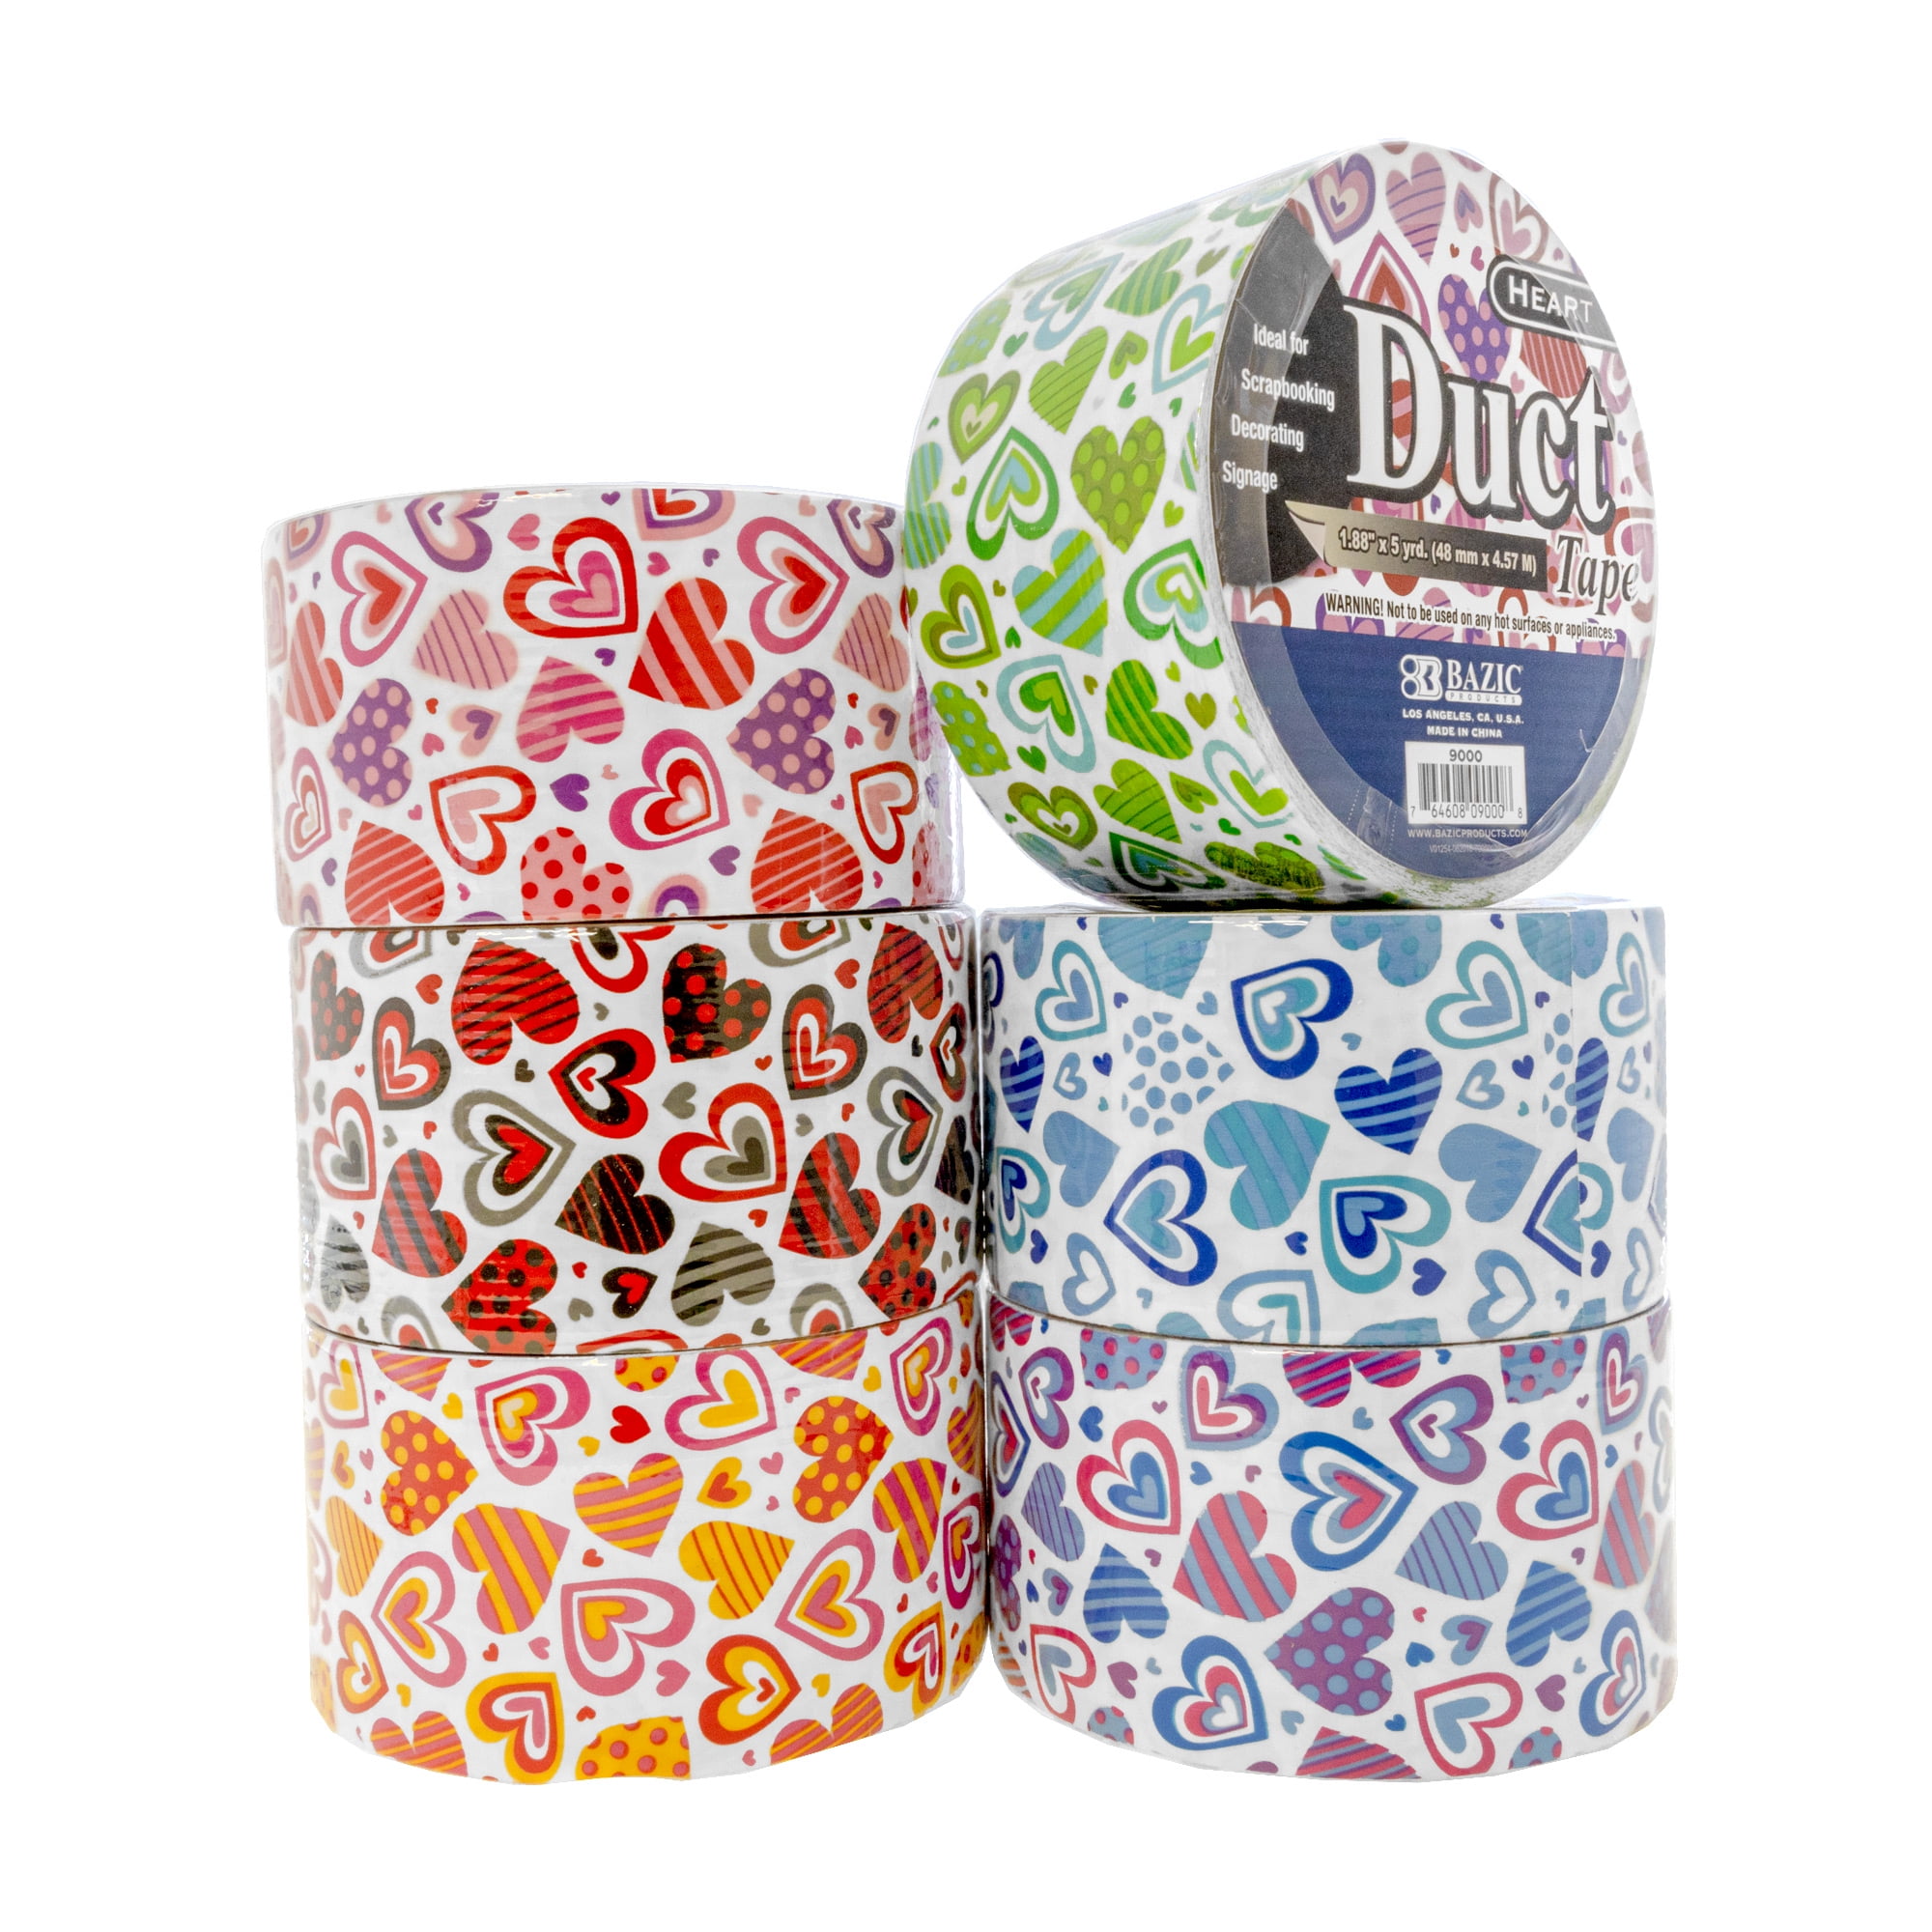 30 Rolls Washi Masking Tape Set, EEEkit Decorative Craft Tape Collection, Decorative Paper Tapes Adhesive Masking Tape for DIY Decor, Crafts, Gift